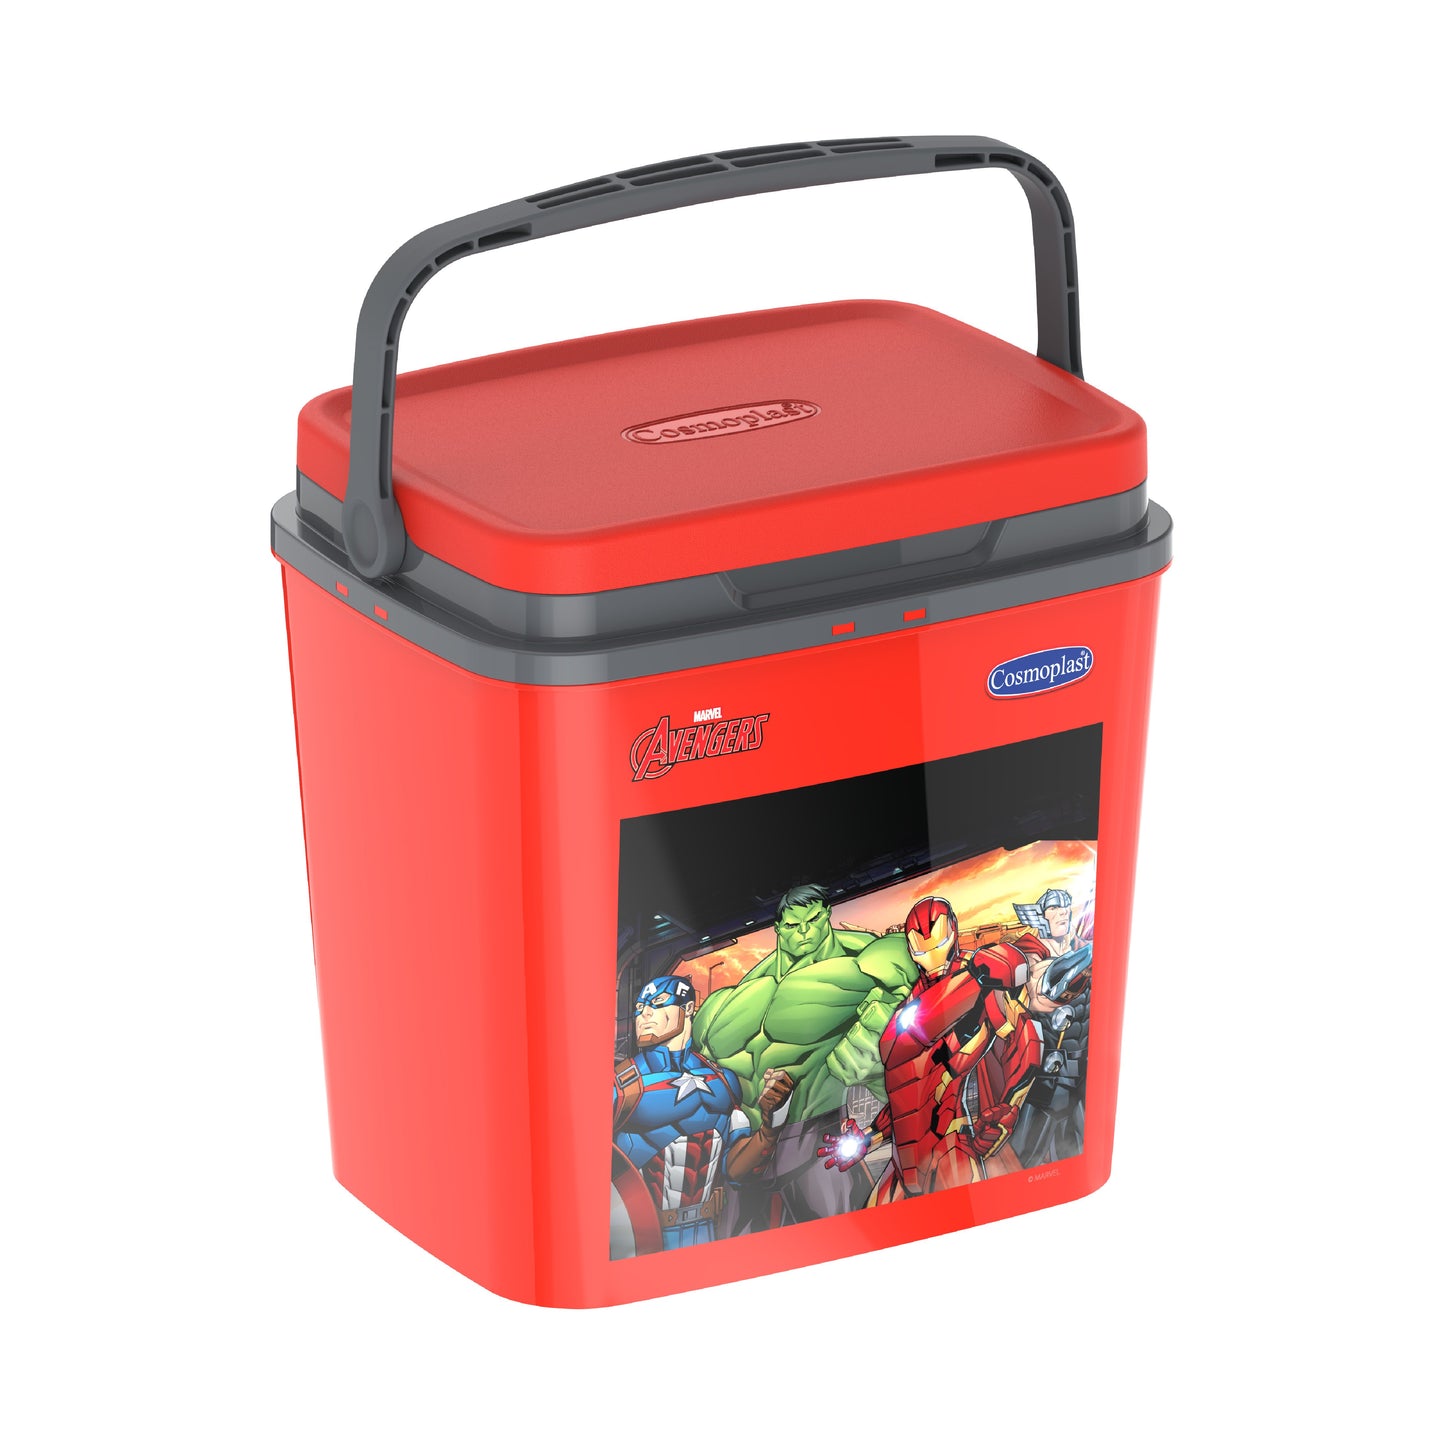 Cosmoplast Disney Marvel Avengers ChillBox Lunch Box Cooler Icebox 4 Liters 